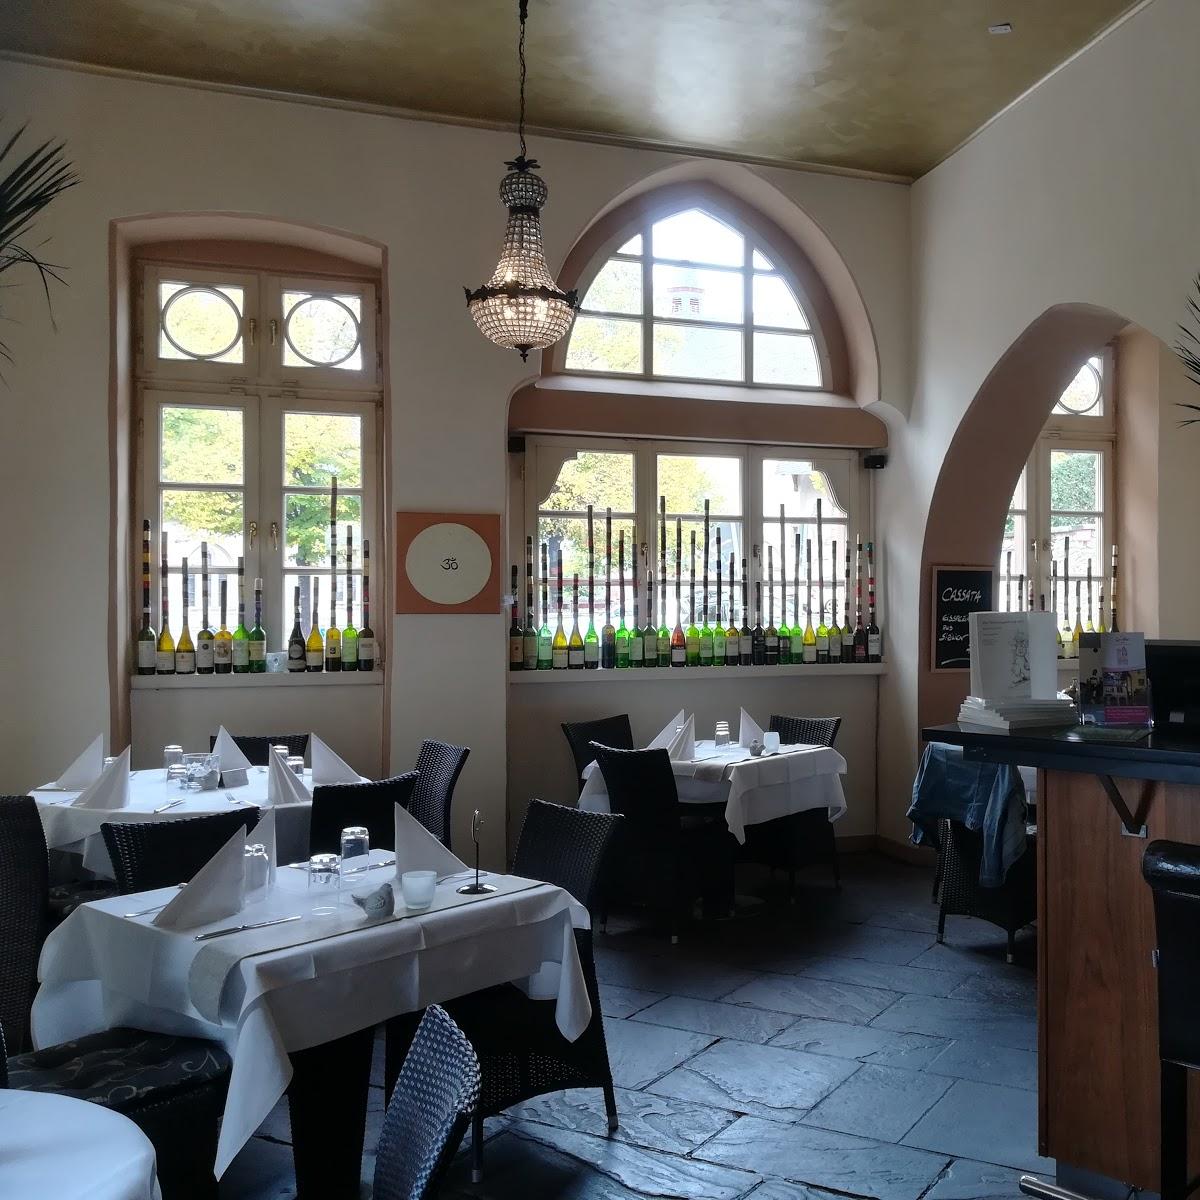 Restaurant "Tadim" in  Wetzlar